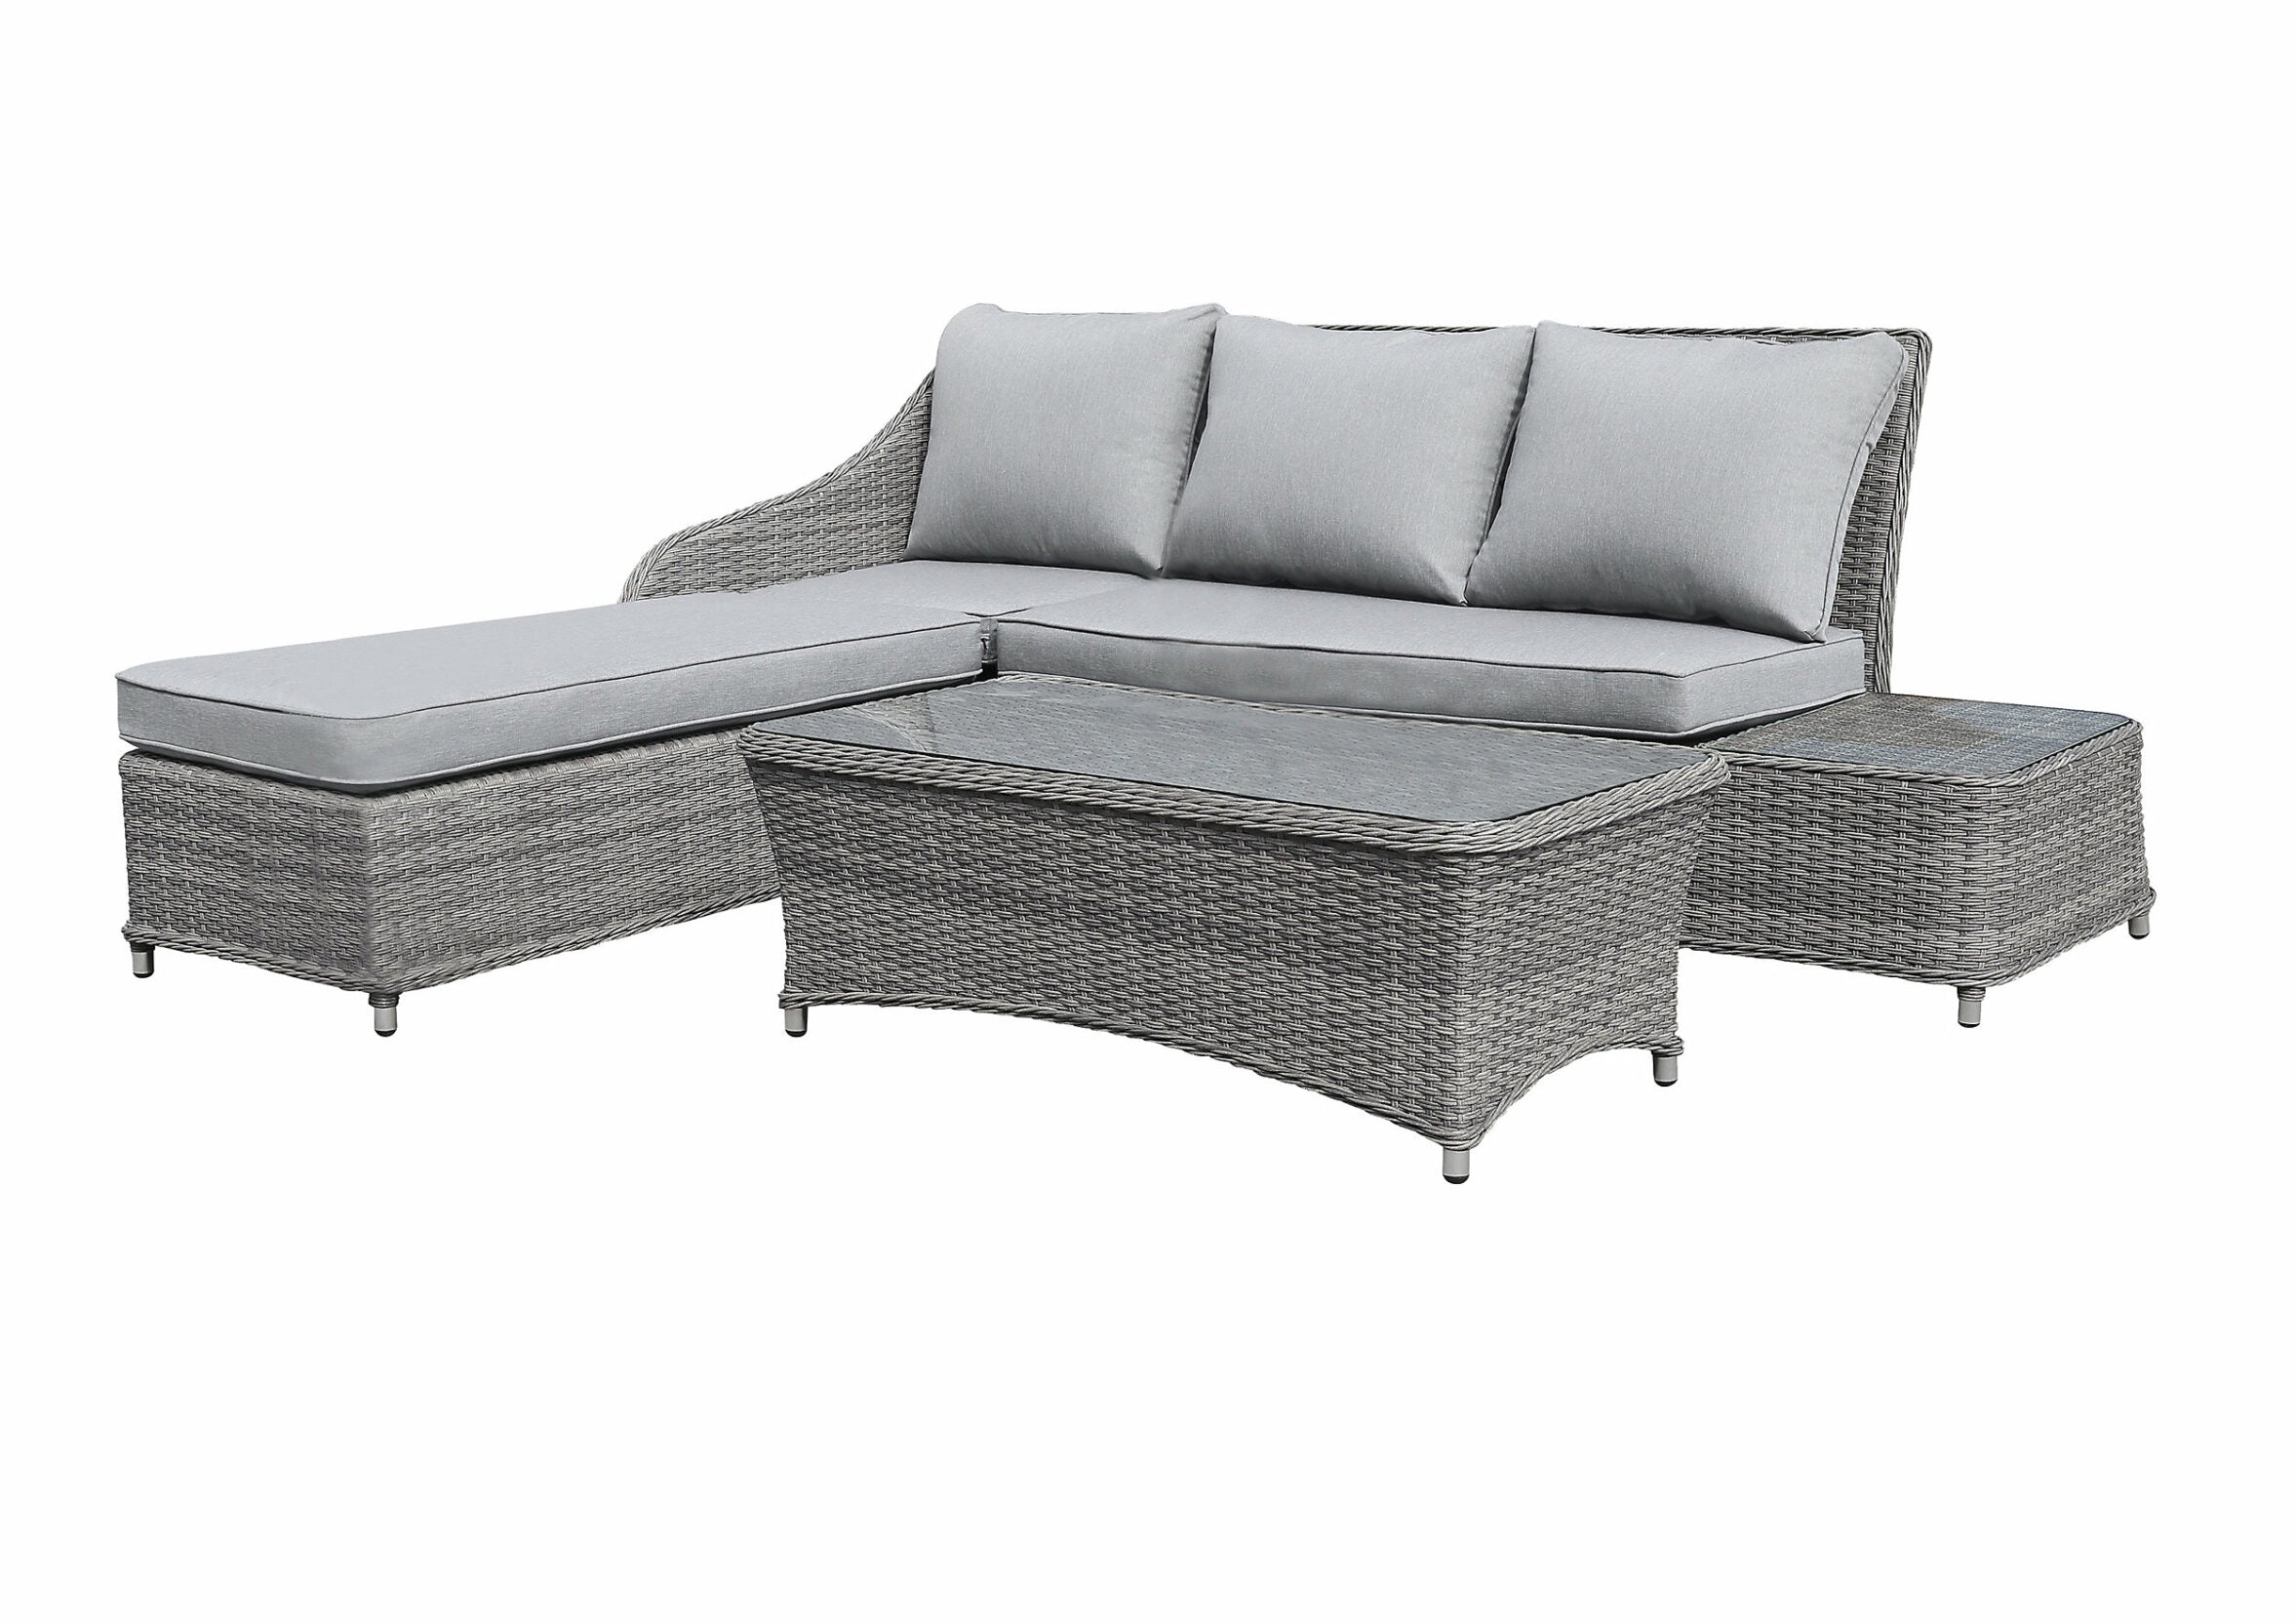 GoodHome Hamilton Steeple grey Rattan effect 5 Seater Coffee set - Rattan Garden Furniture 2619